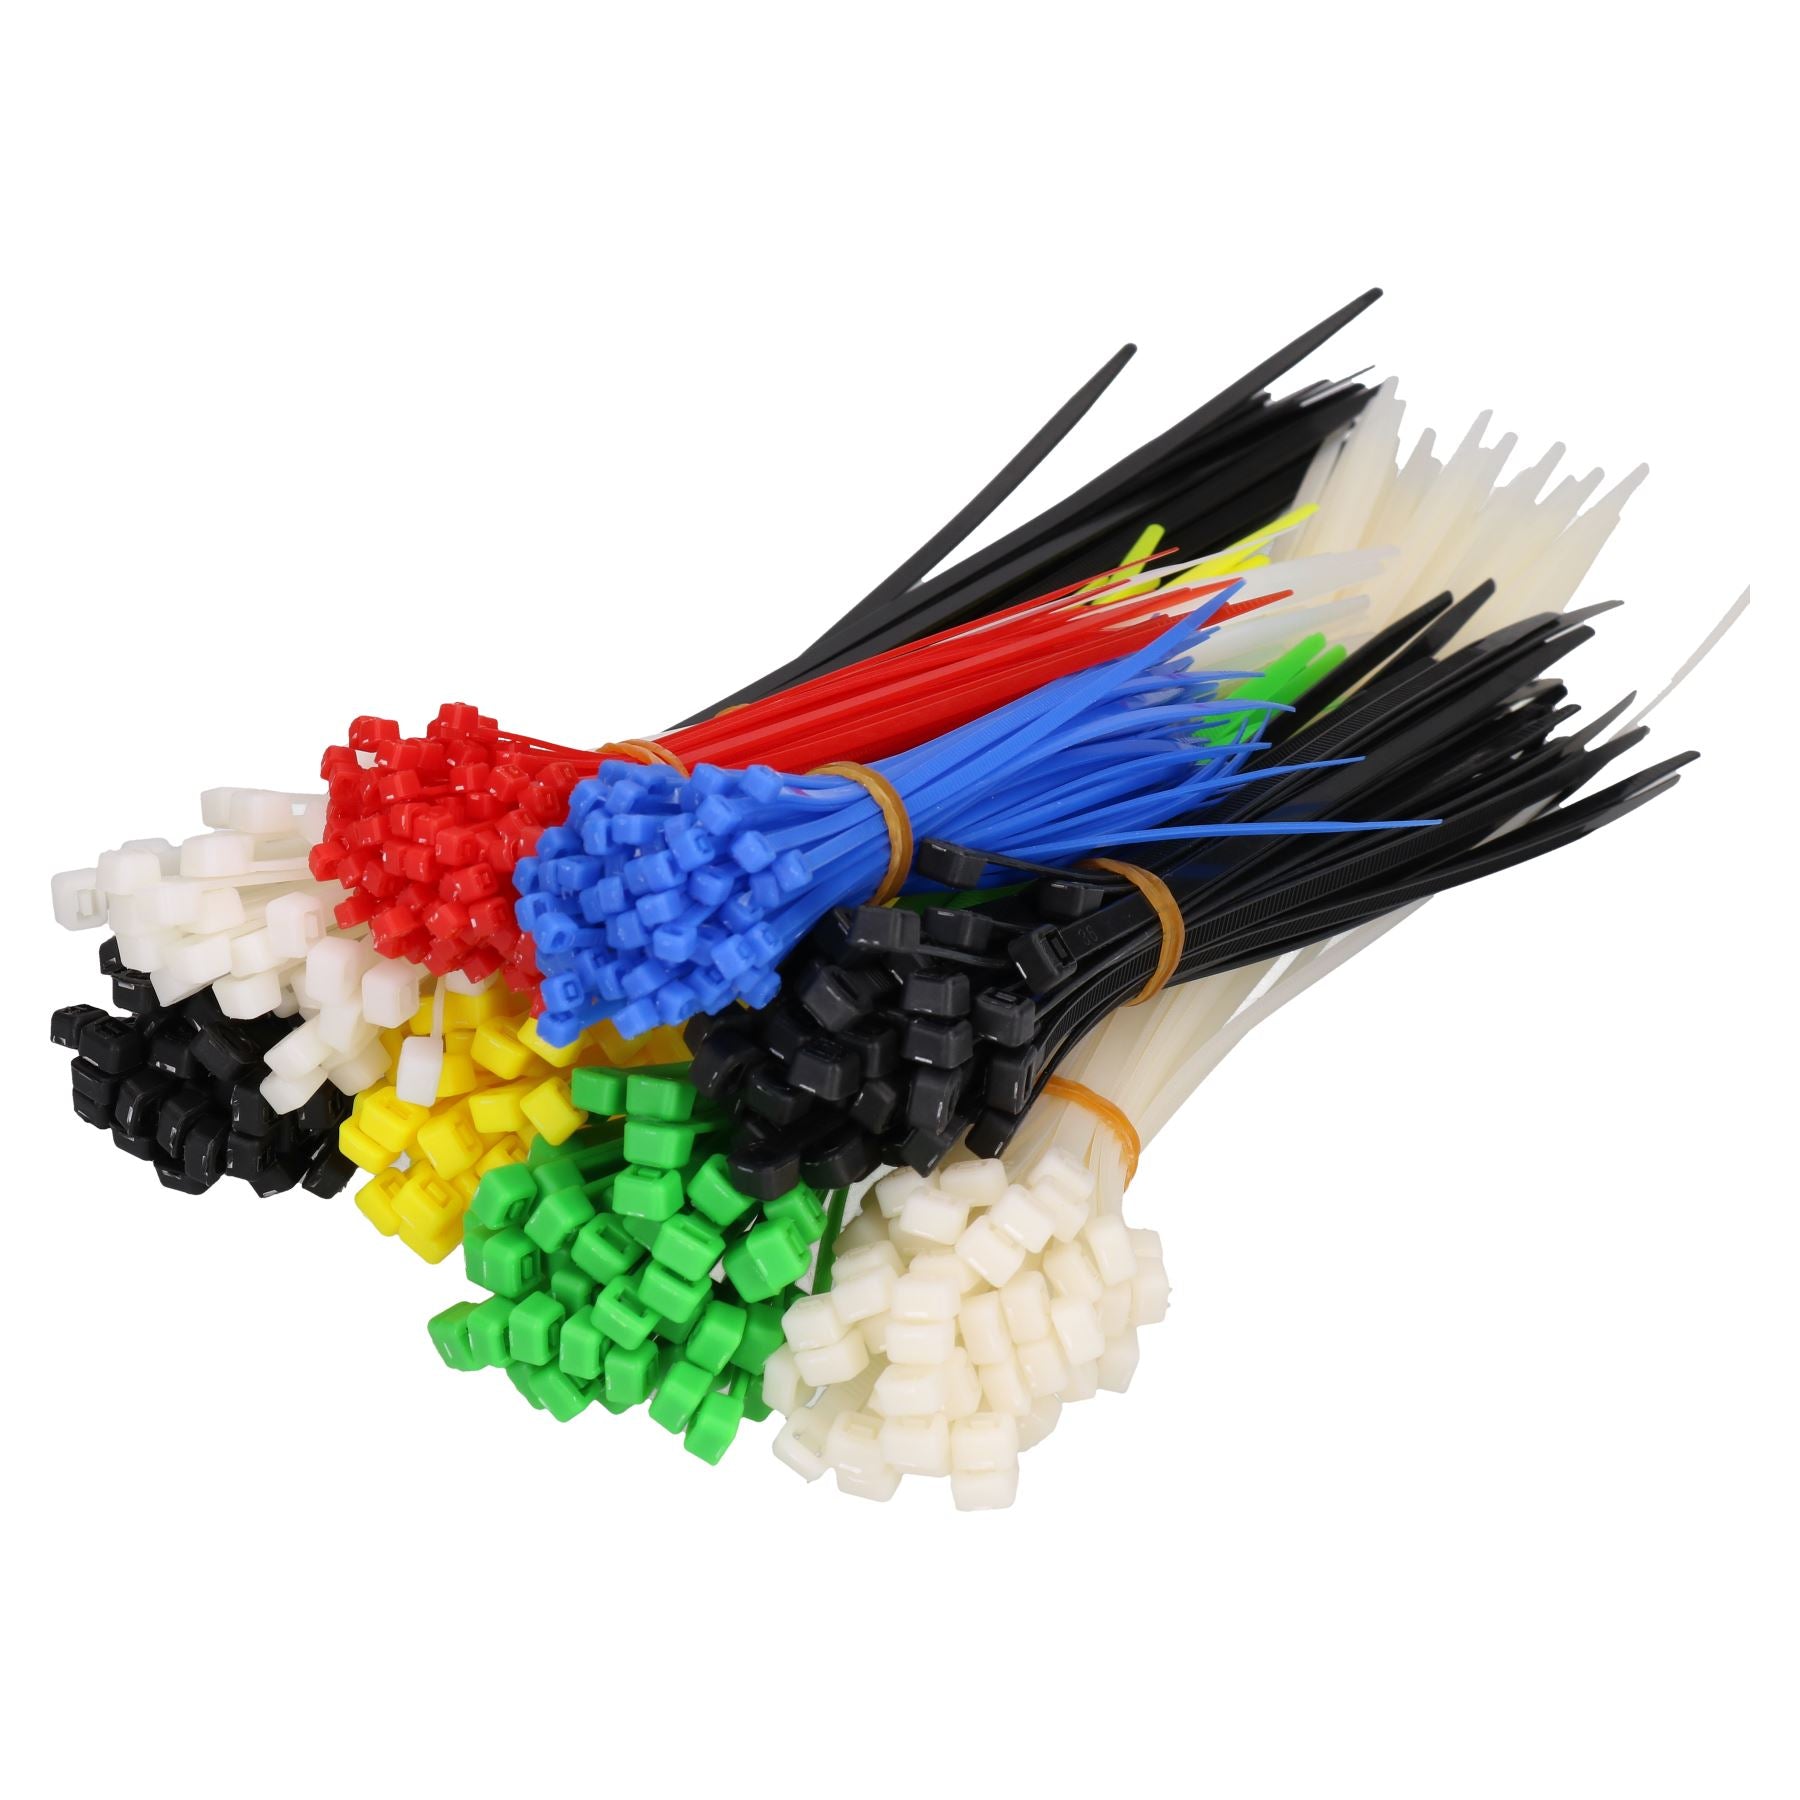 Cable Zip Ties Wraps Fasteners Plastic Nylon Various Sizes Multi Colour 500pc